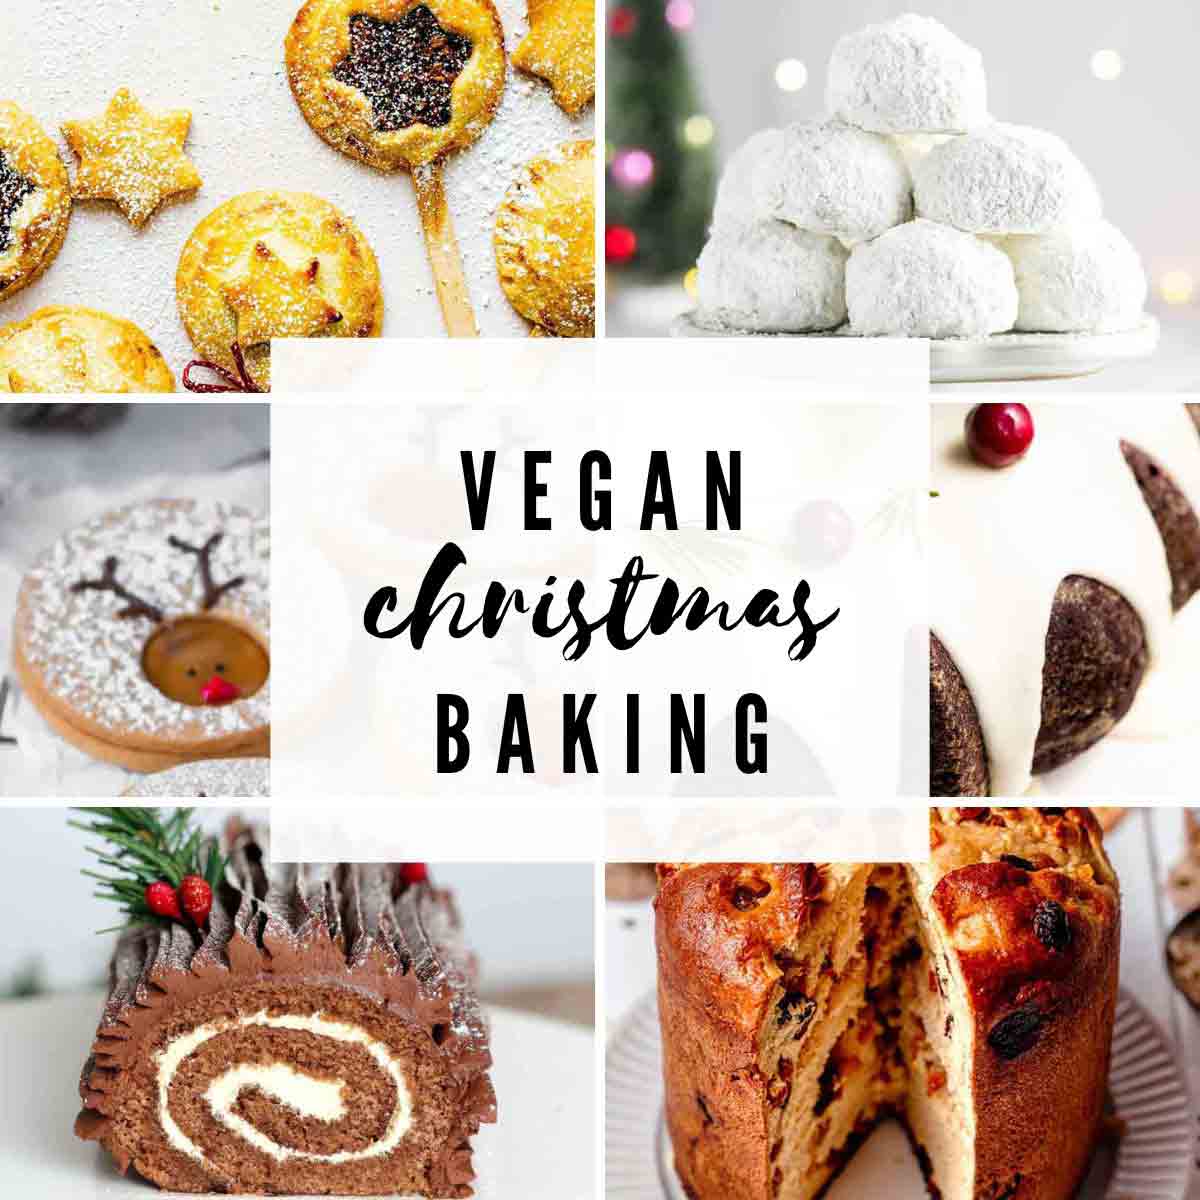 6 Images Of Vegan Christmas Baking Desserts